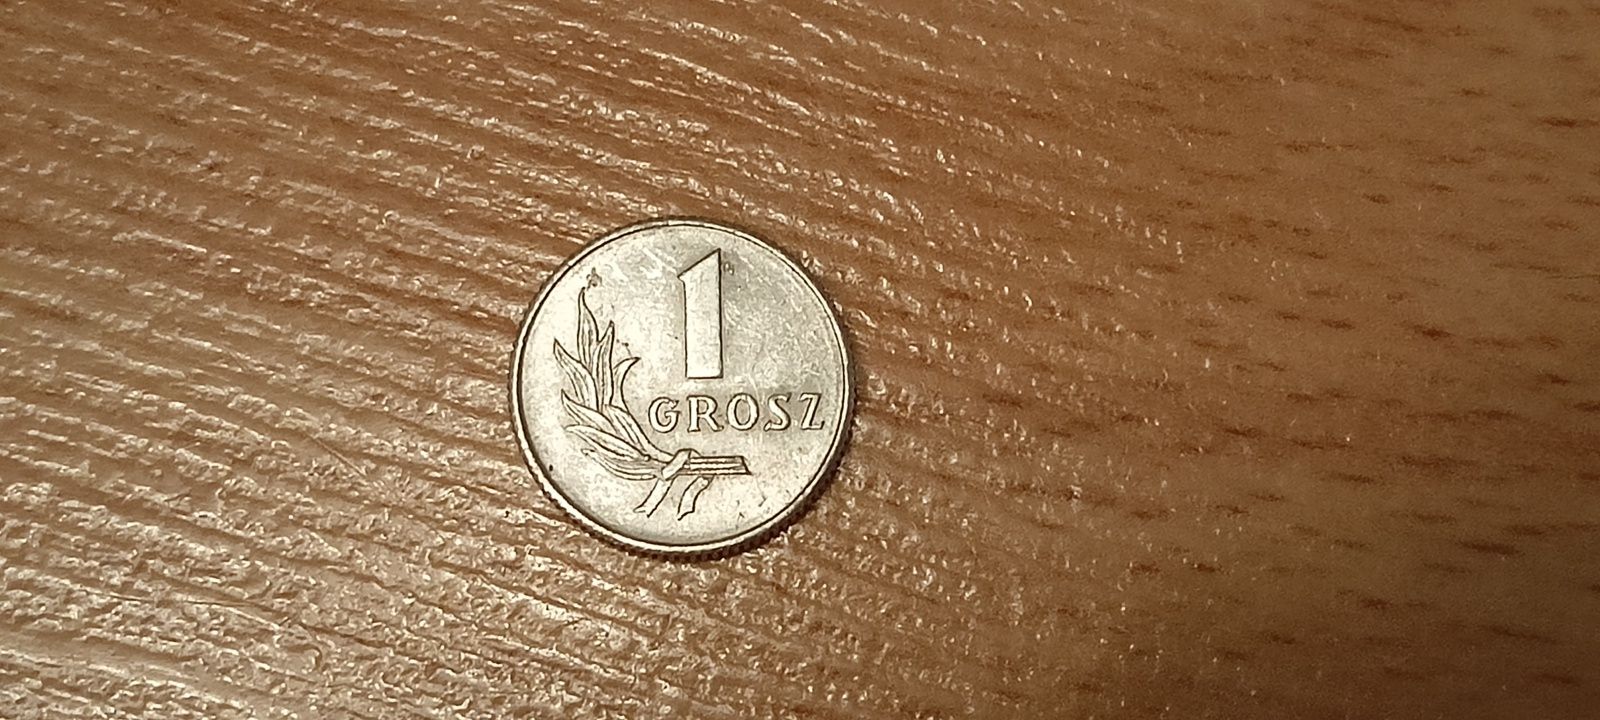 Moneta 1 grosz z roku 1949